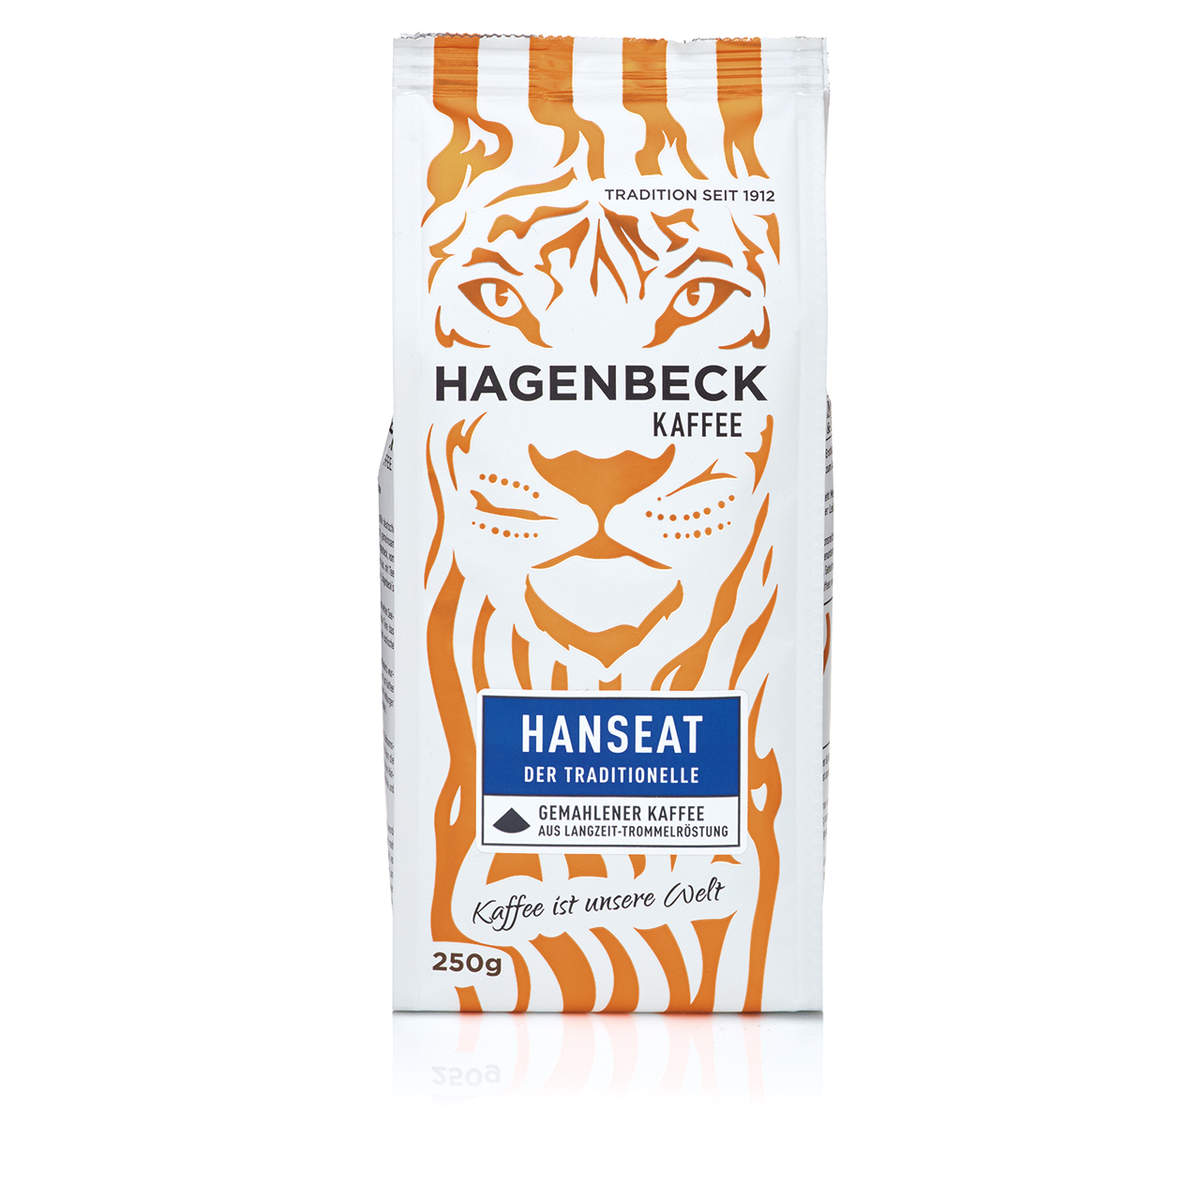 Hagenbeck Kaffee – Hanseat